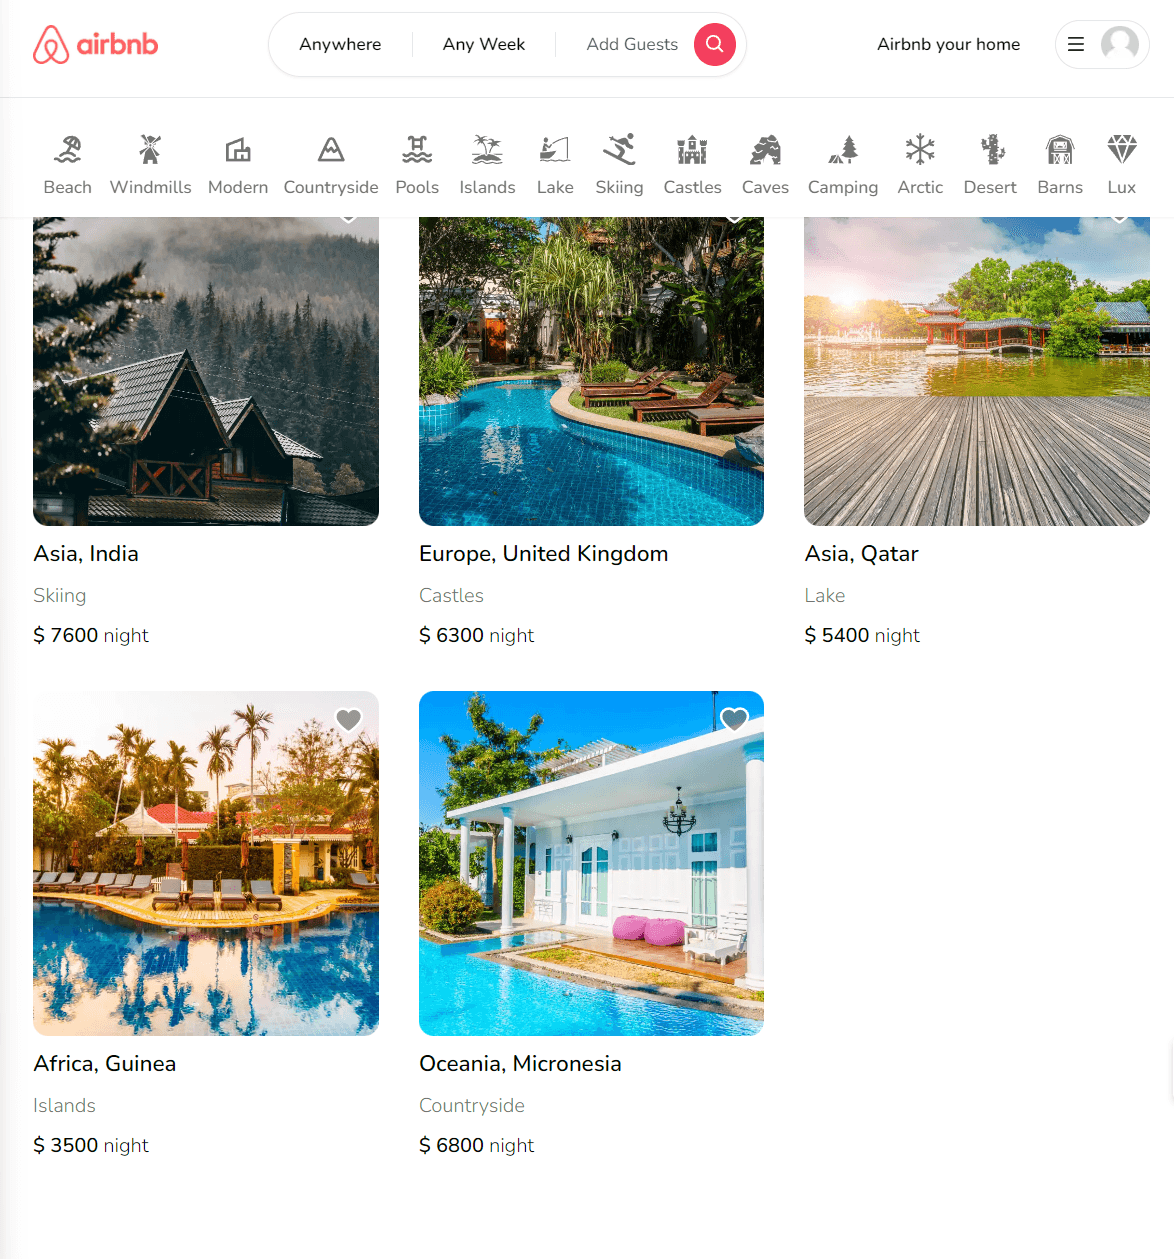 Airbnb Web App